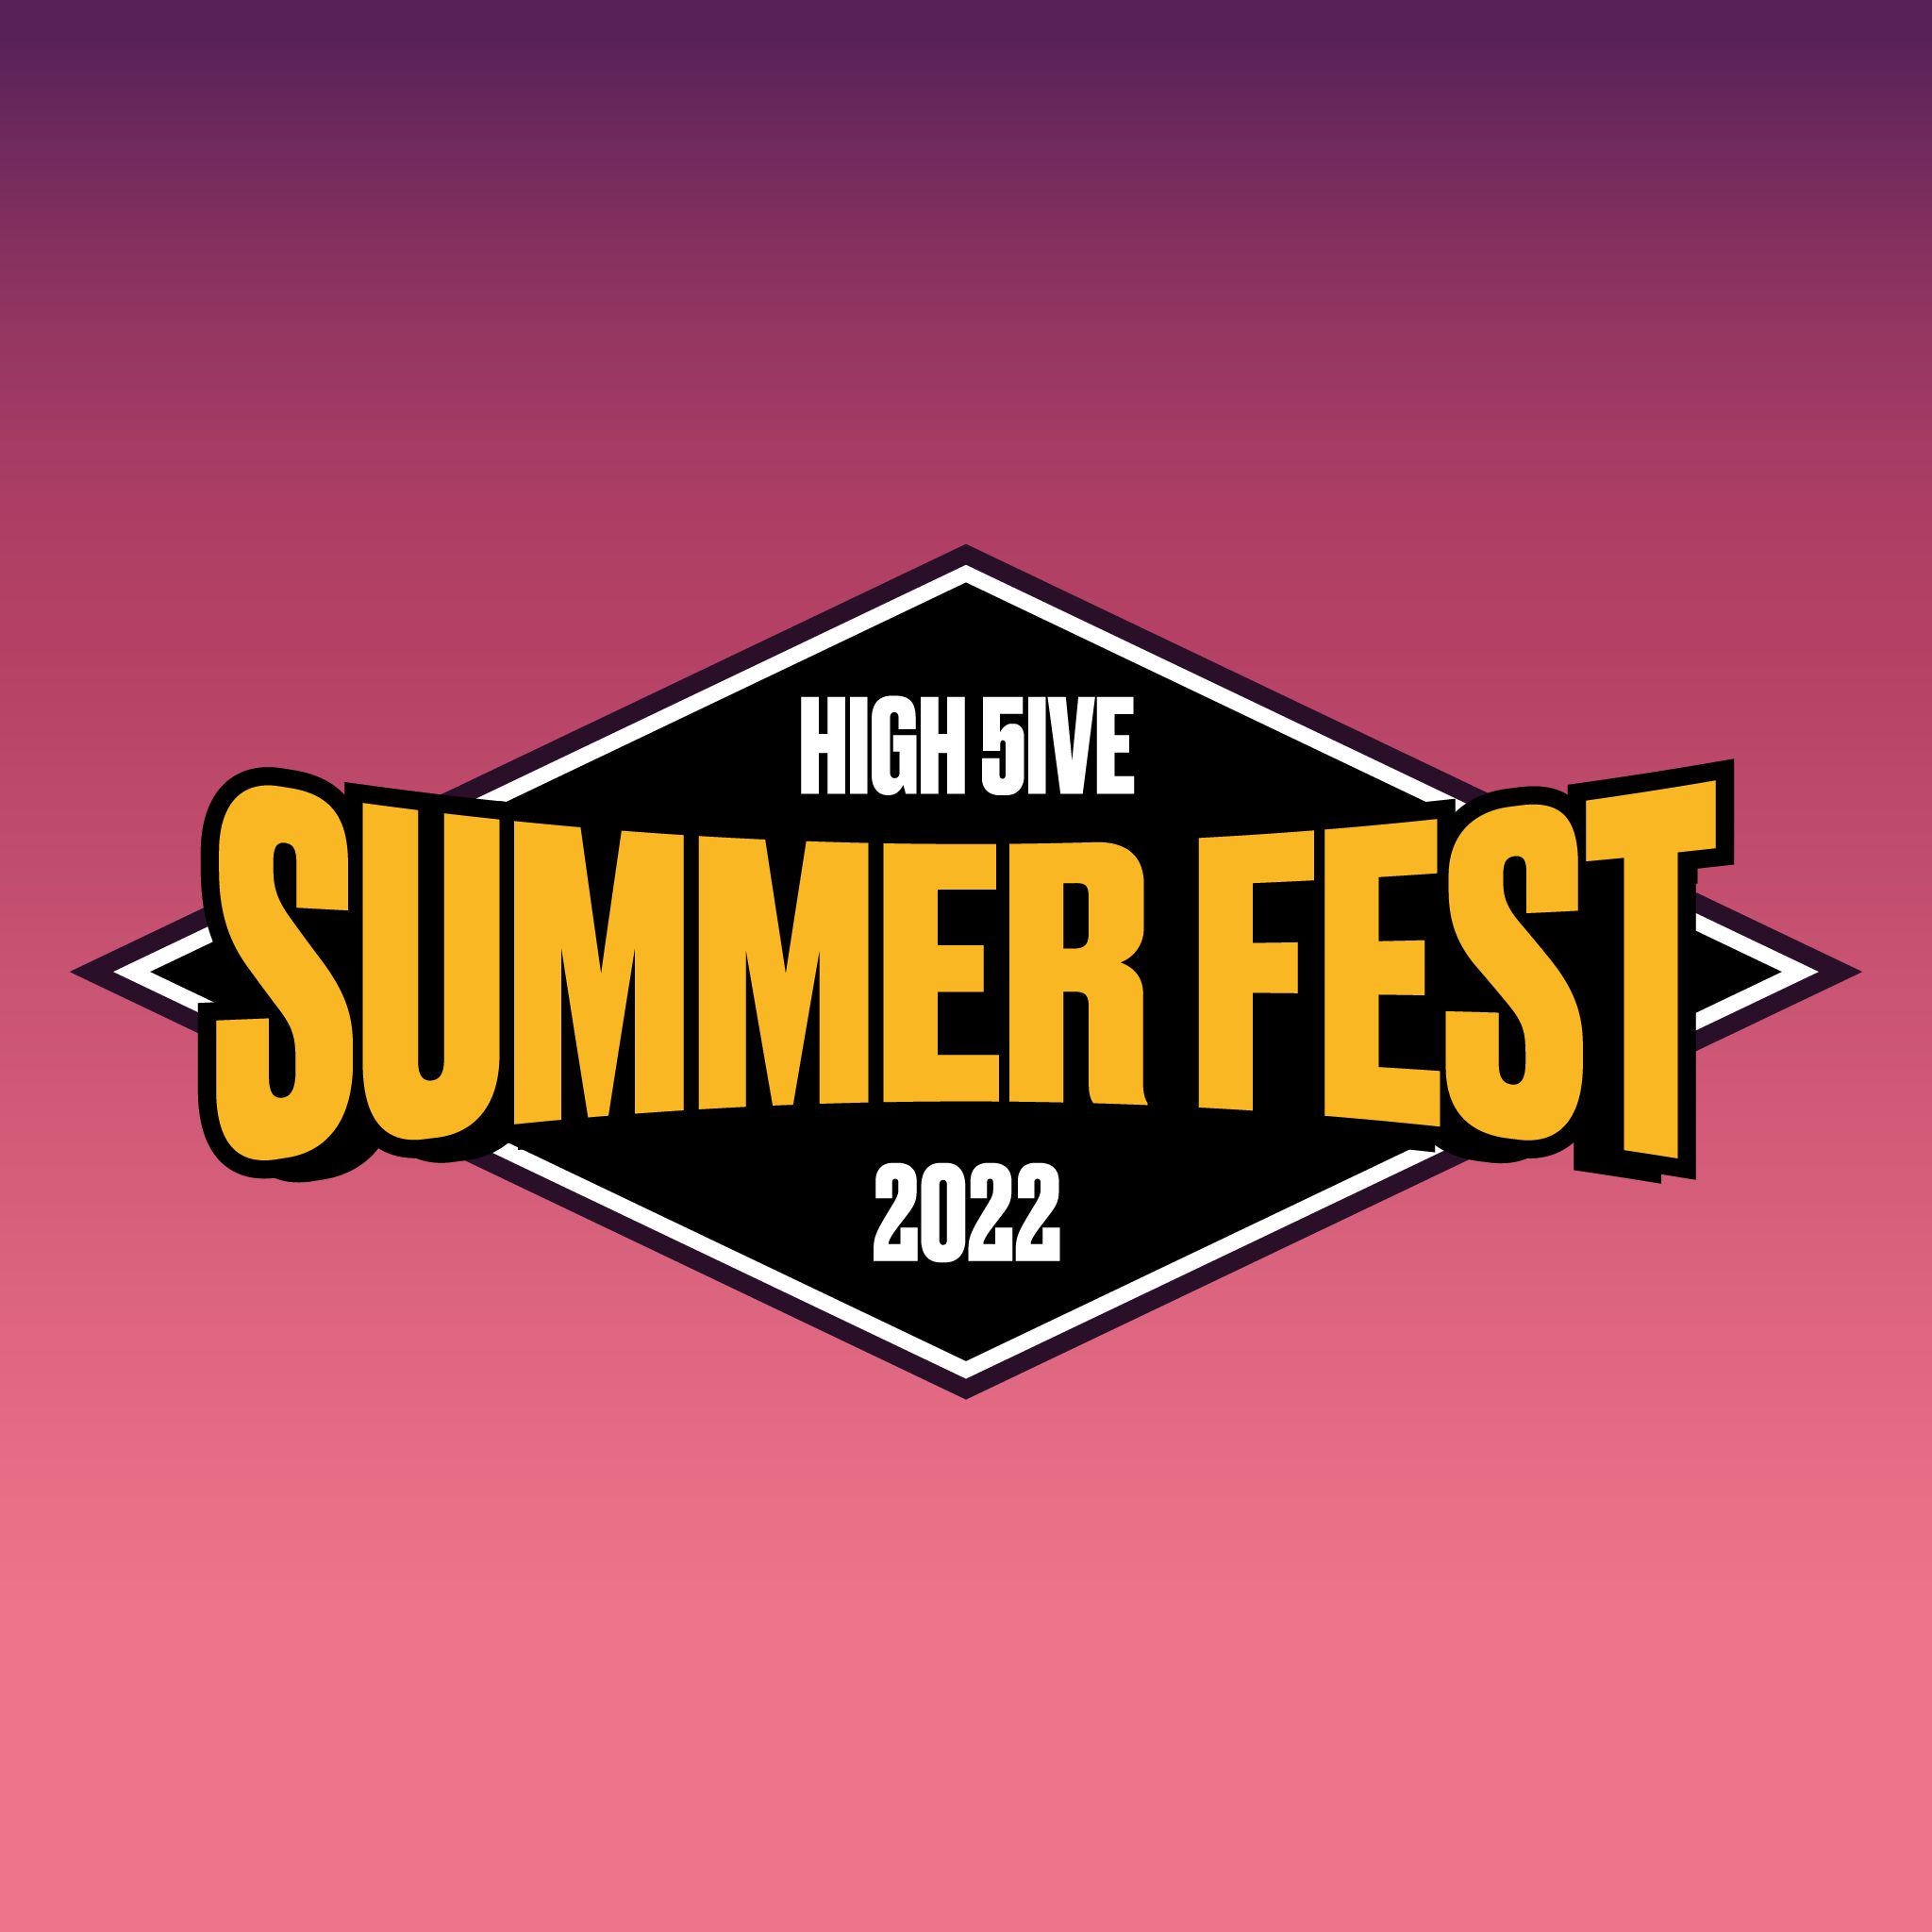 High 5ive Summer Fest